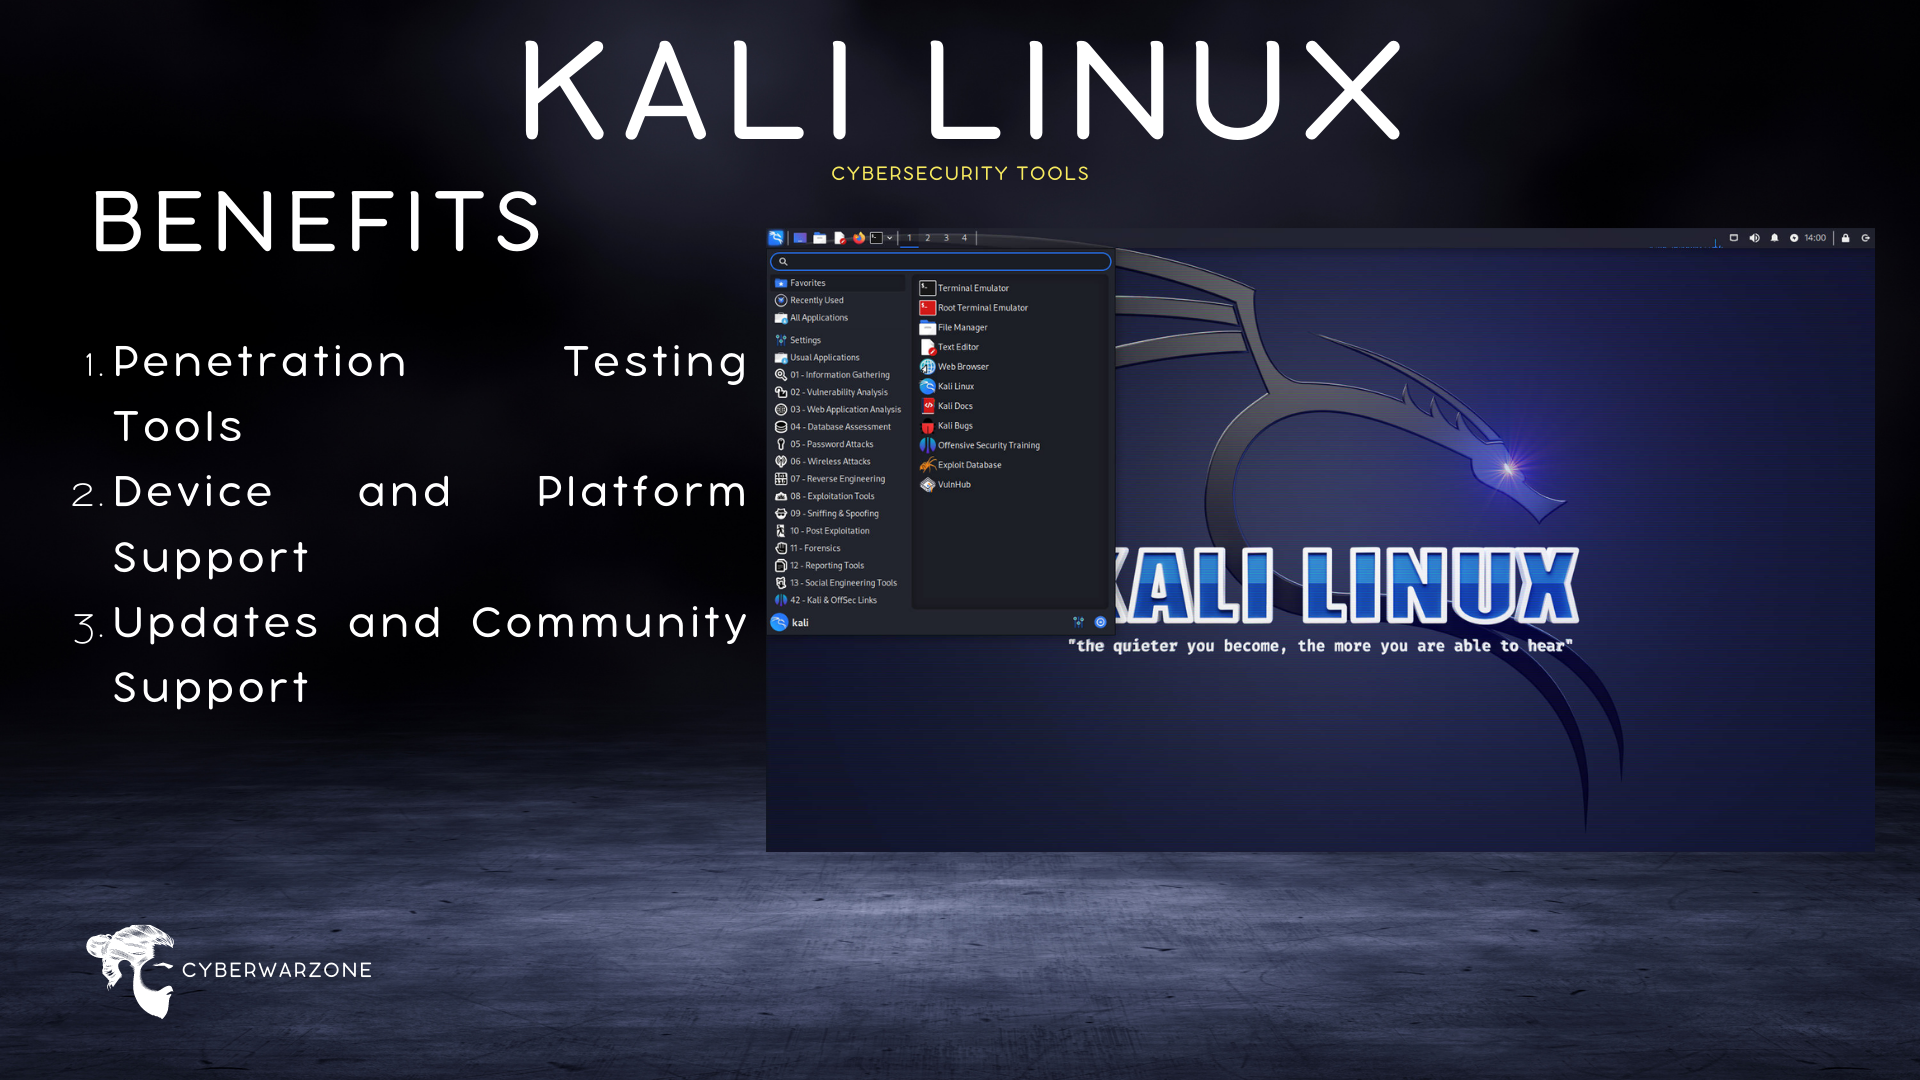 Kali Linux Benefits